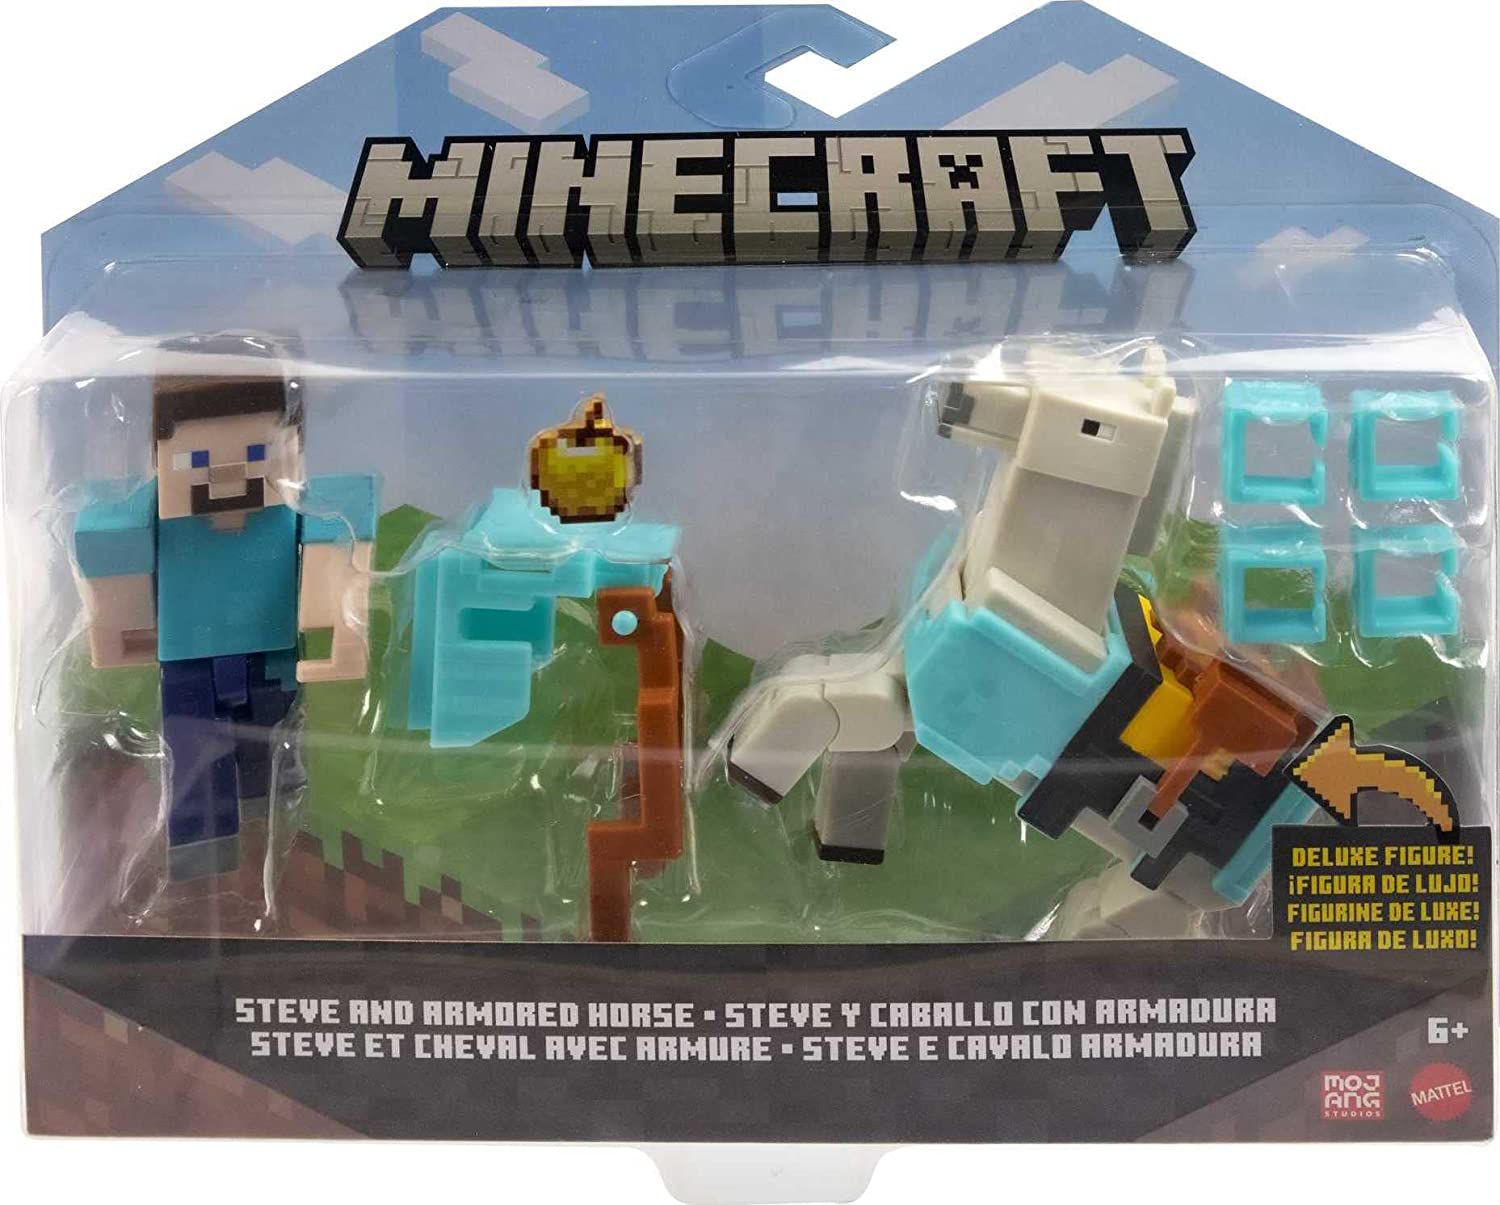 Kit 16 Bonecos Minifigures Blocos De Montar Minecraft Top em